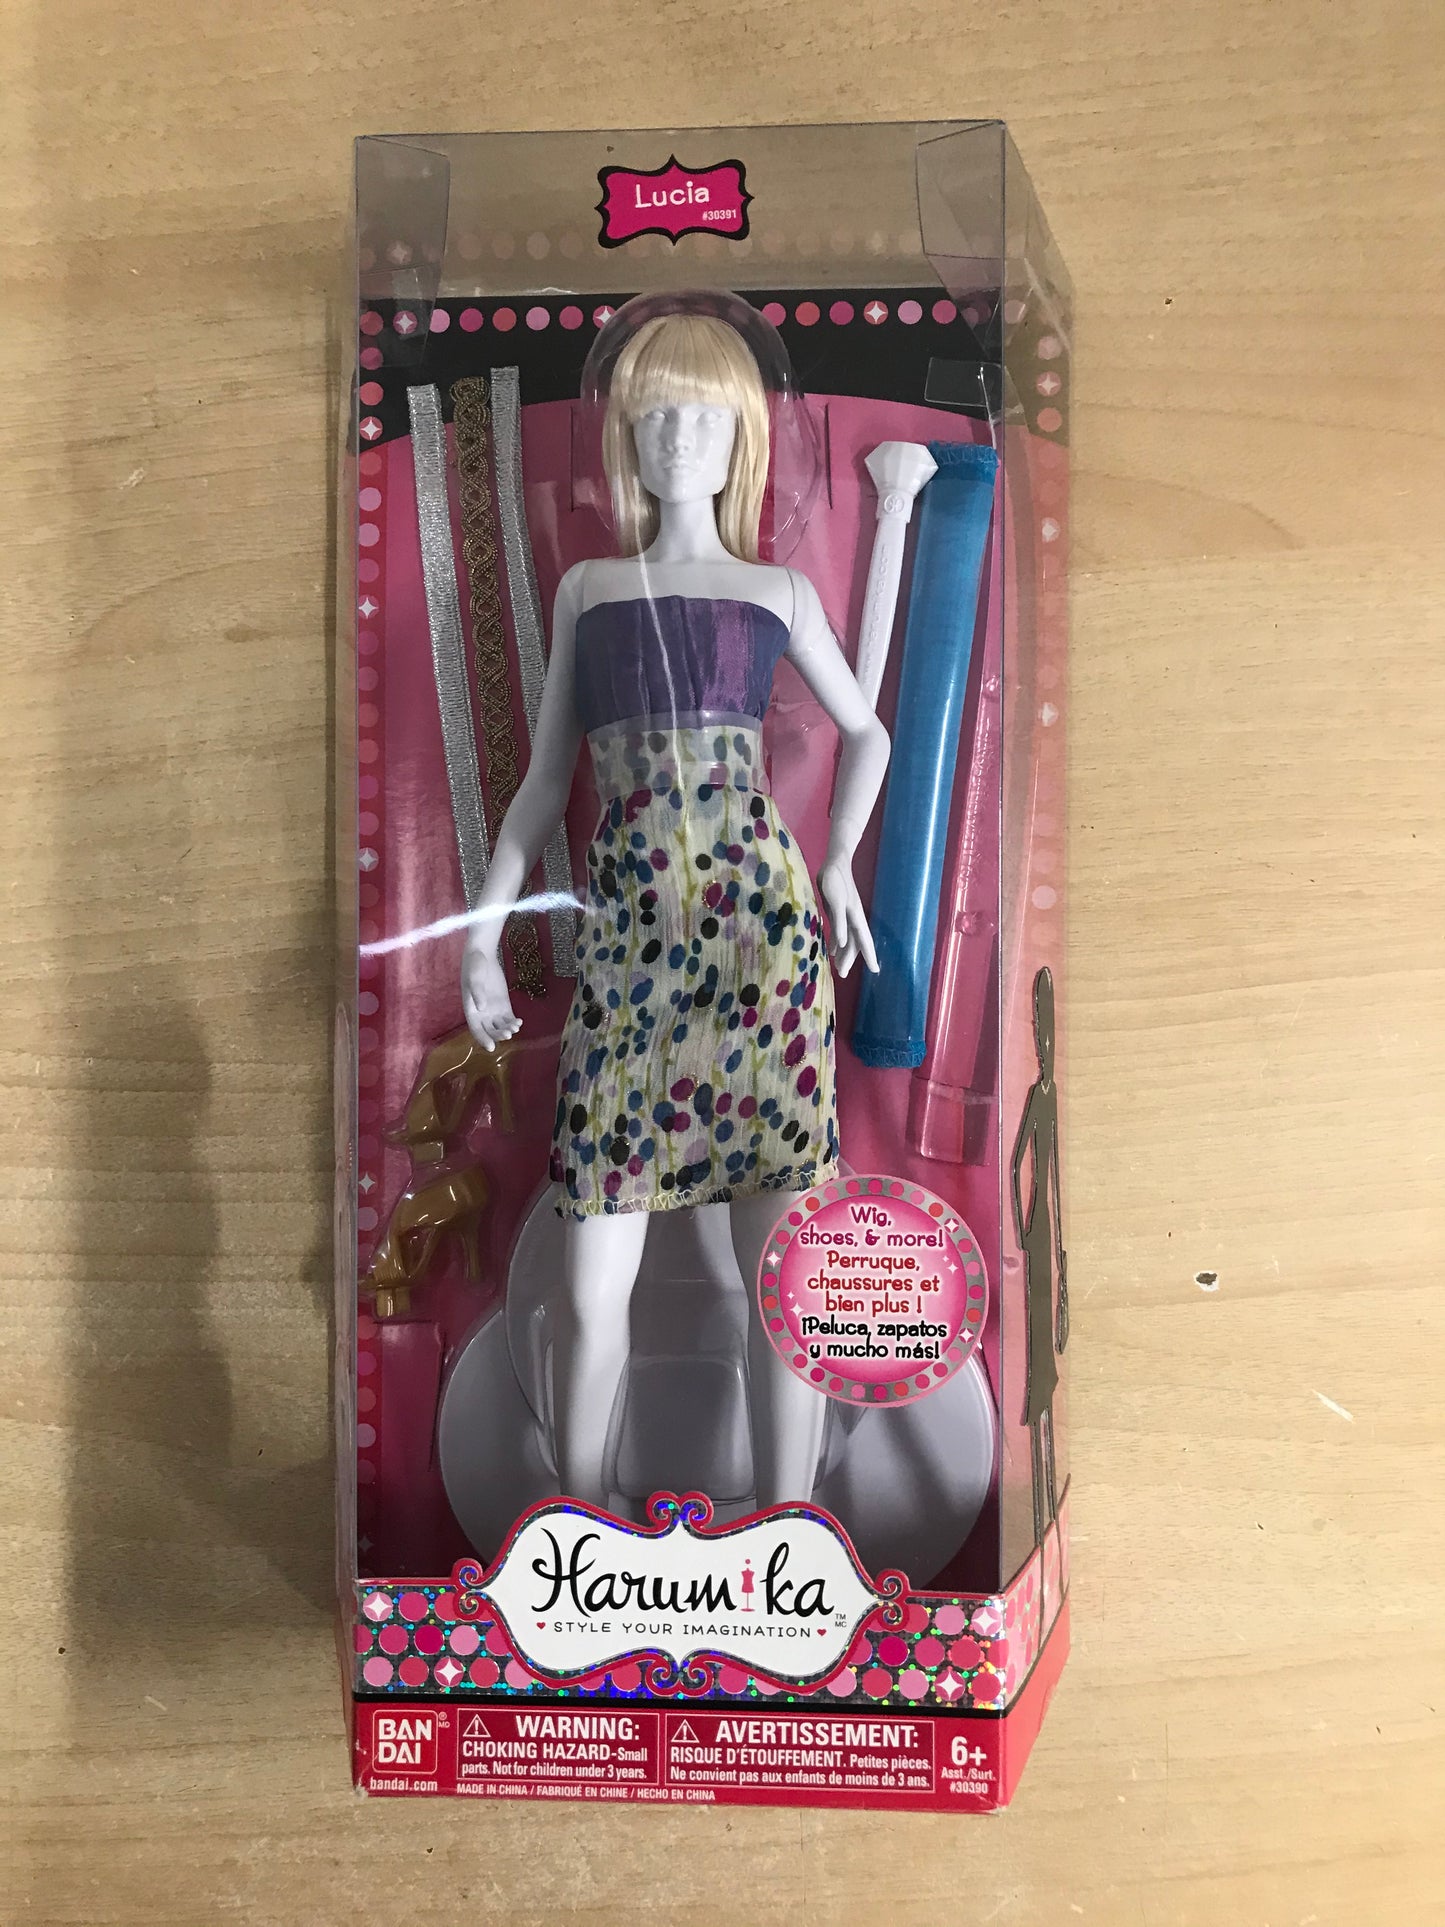 Harumika Mannequin Doll Bandai 12 inch Lucia 2010 NEW IN BOX